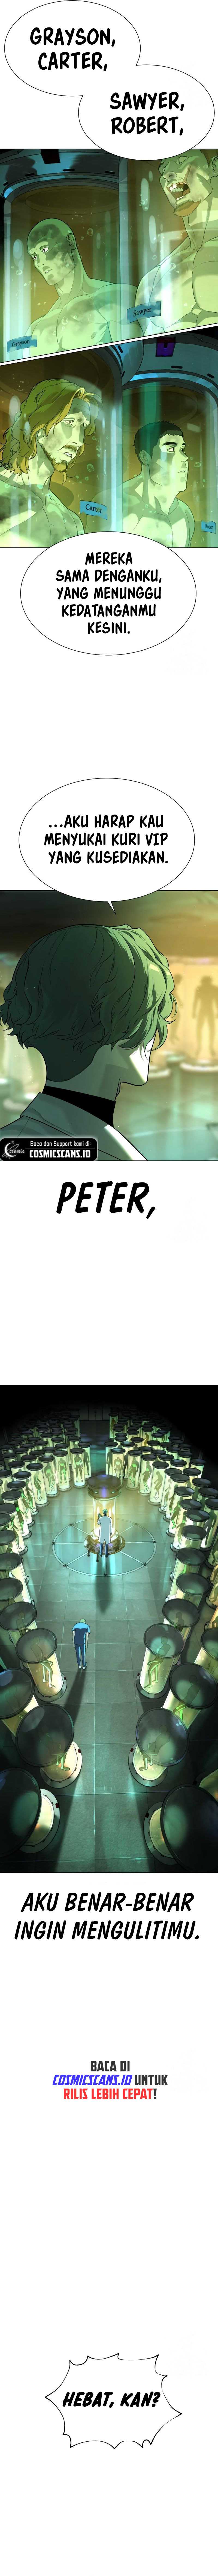 Killer Peter Chapter 16 Image 21